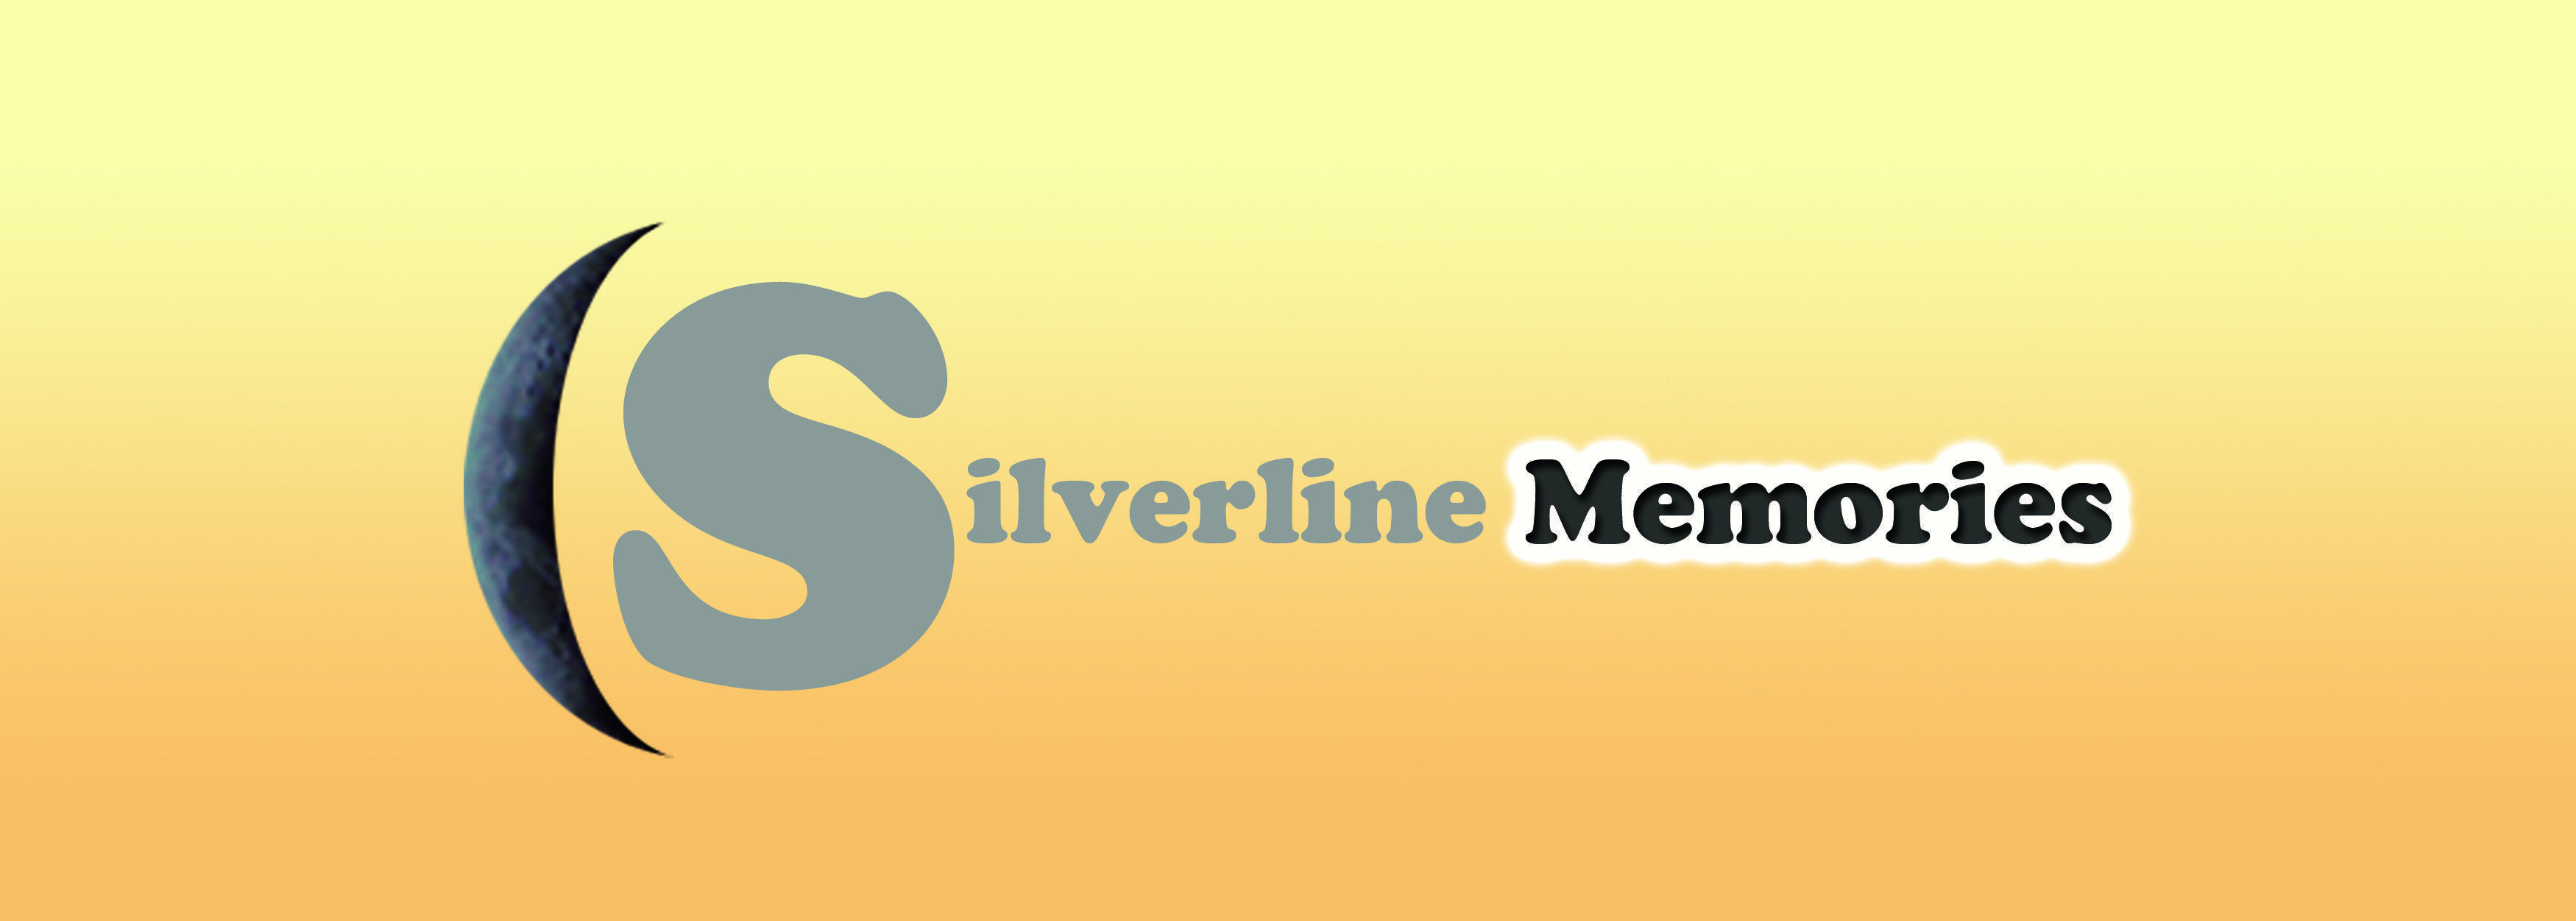 Silverline Logo - Silverline Logo (2) - Information Now